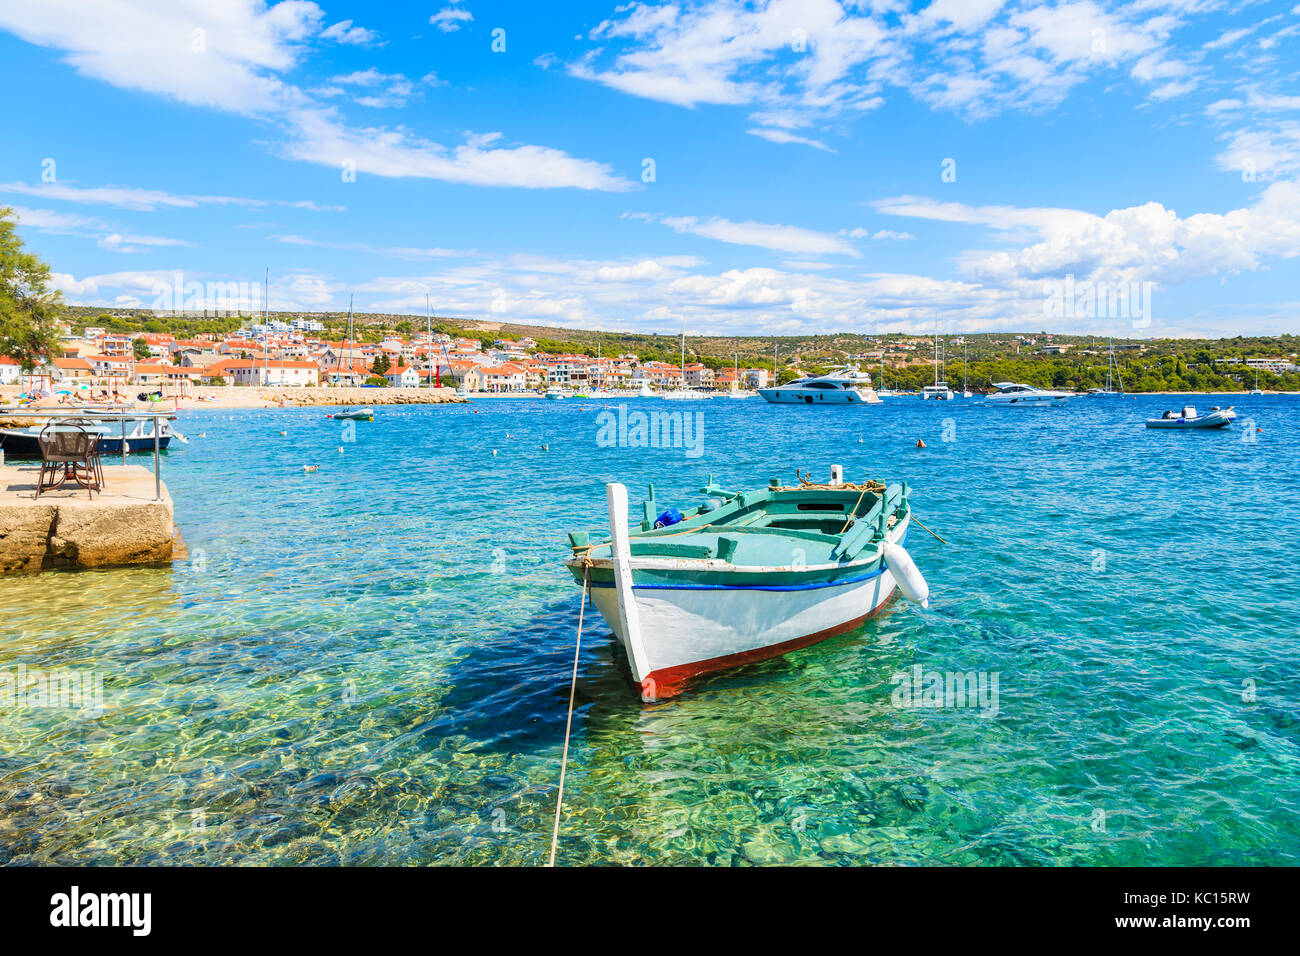 Colorful fishing boat on turquoise sea water in Primosten port, Dalmatia, Croatia Stock Photo